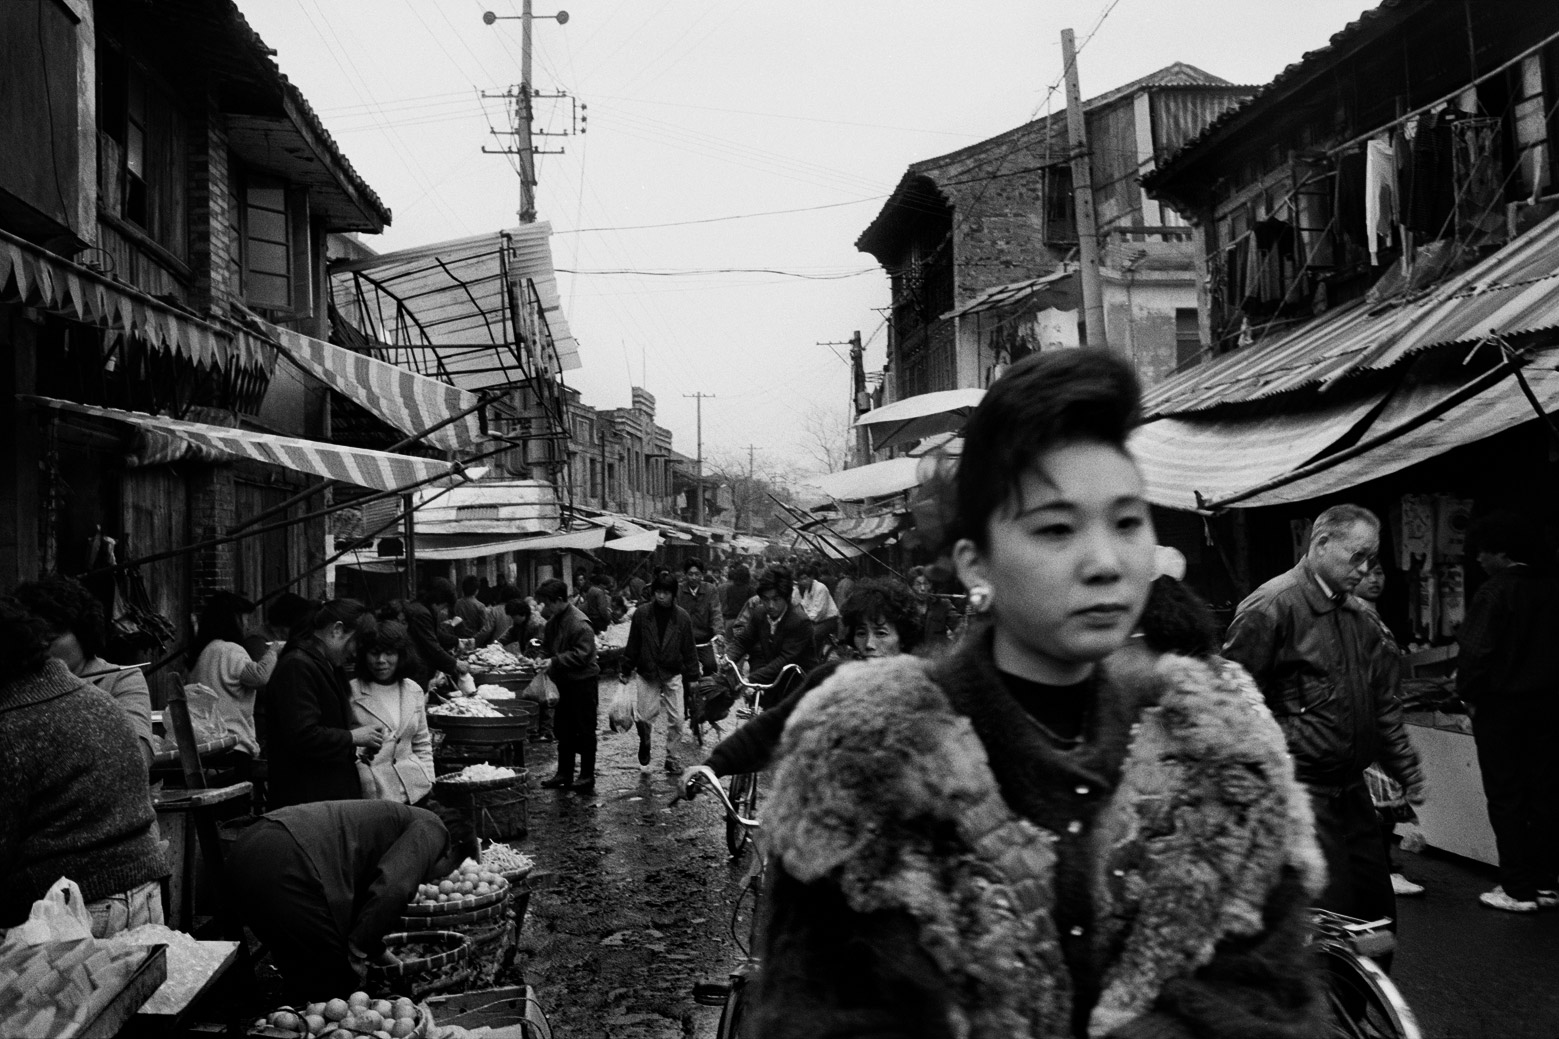 Town of Wenzhou, Province of Zhejiang, China, 1991.